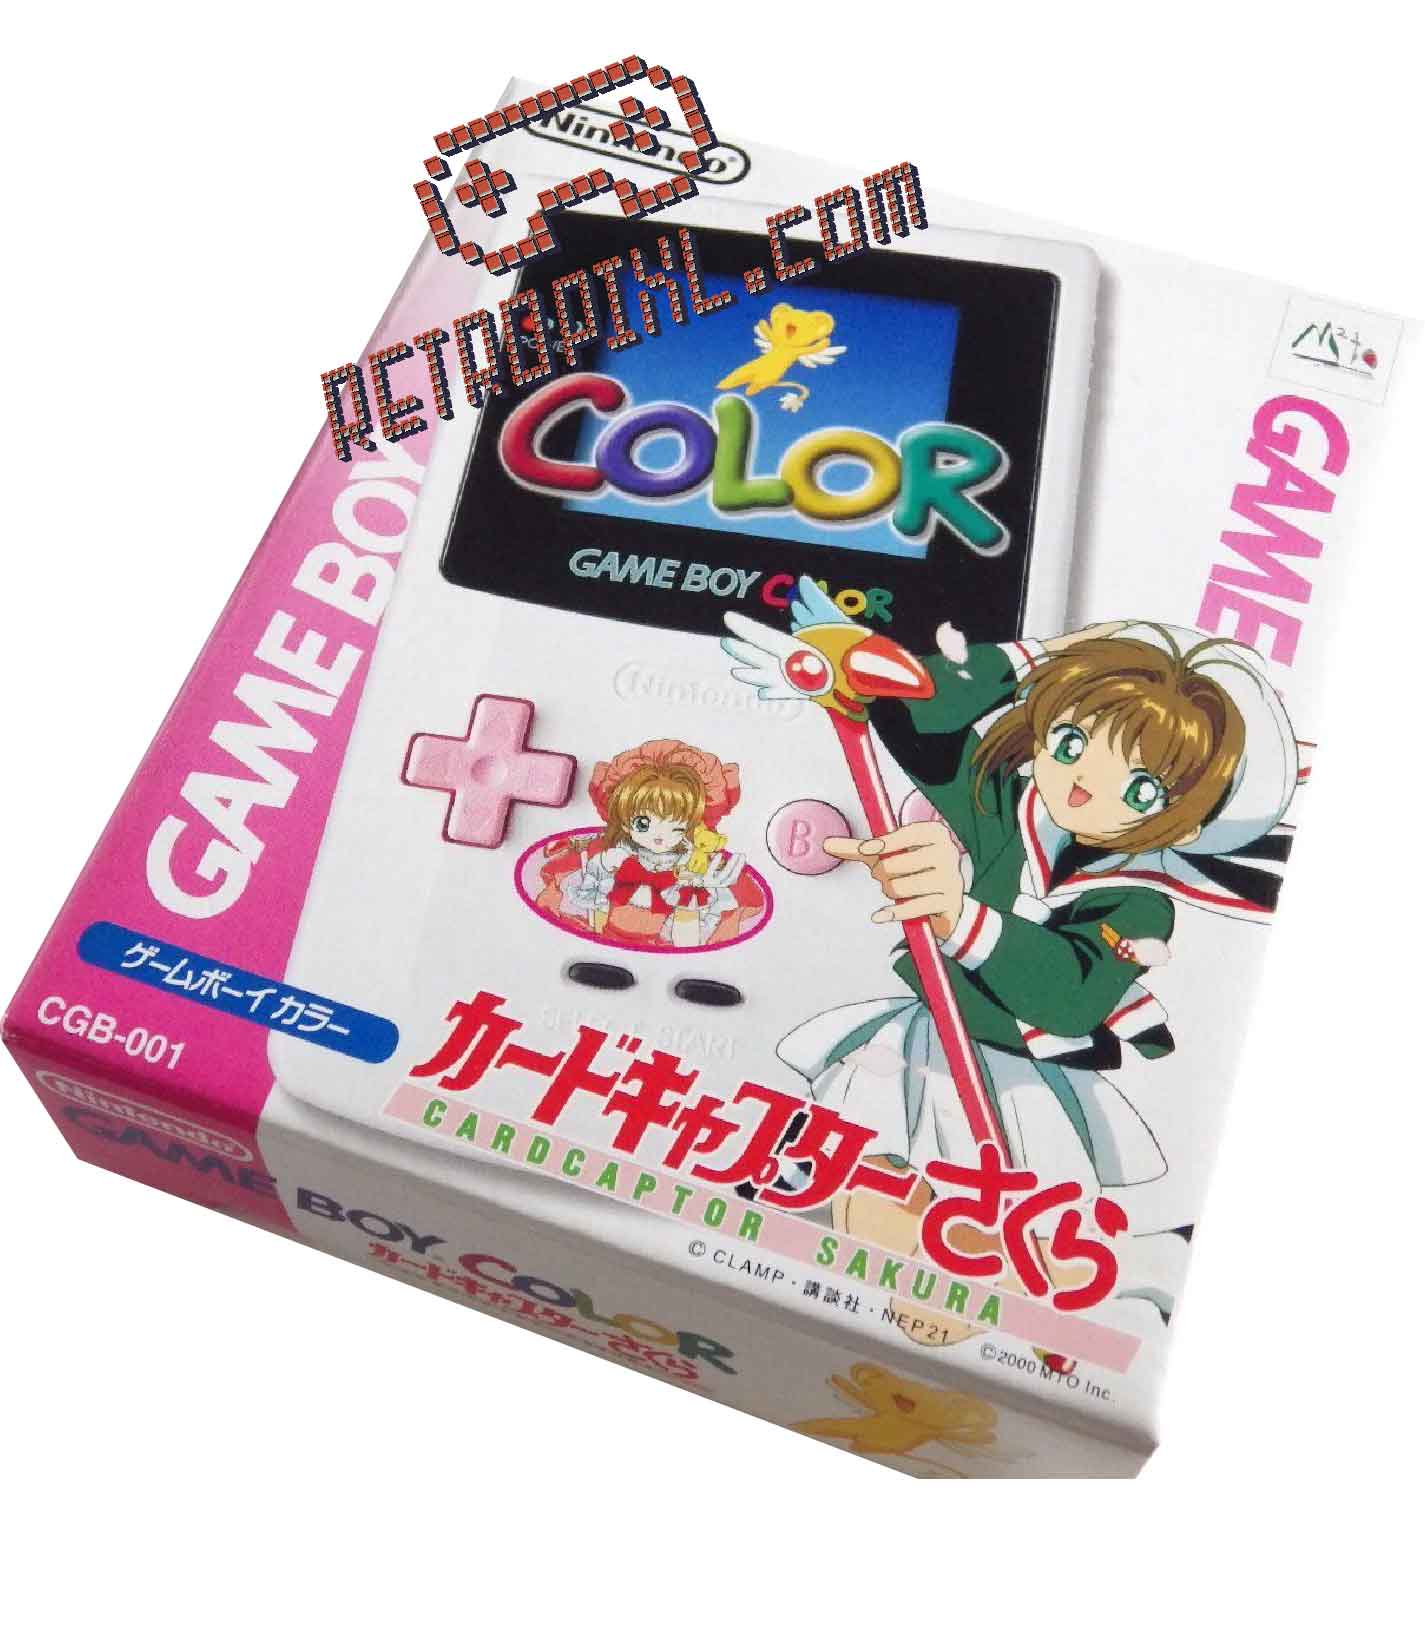 Nintendo Game Boy Color Cardaptor Sakura LIMITED EDITION retropixl retrogaming 3